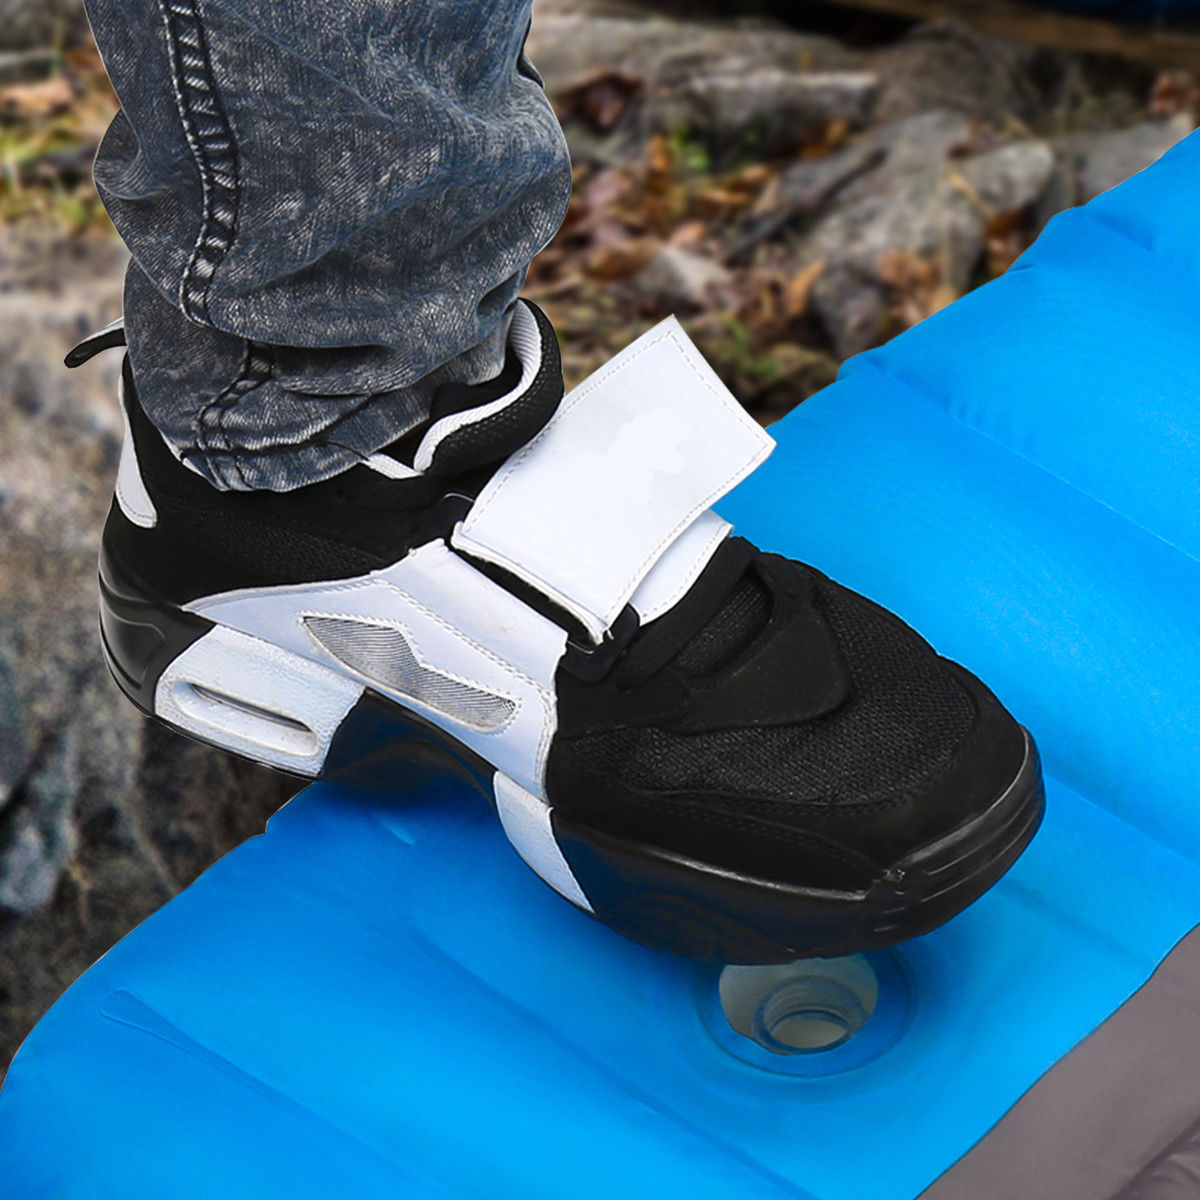 Elastic-Sponge-Outdoor-Camping-Inflatable-Sleeping-Pad-Ultralight-Air-Mat-Mattresses-Hiking-Inflatab-1337011-5